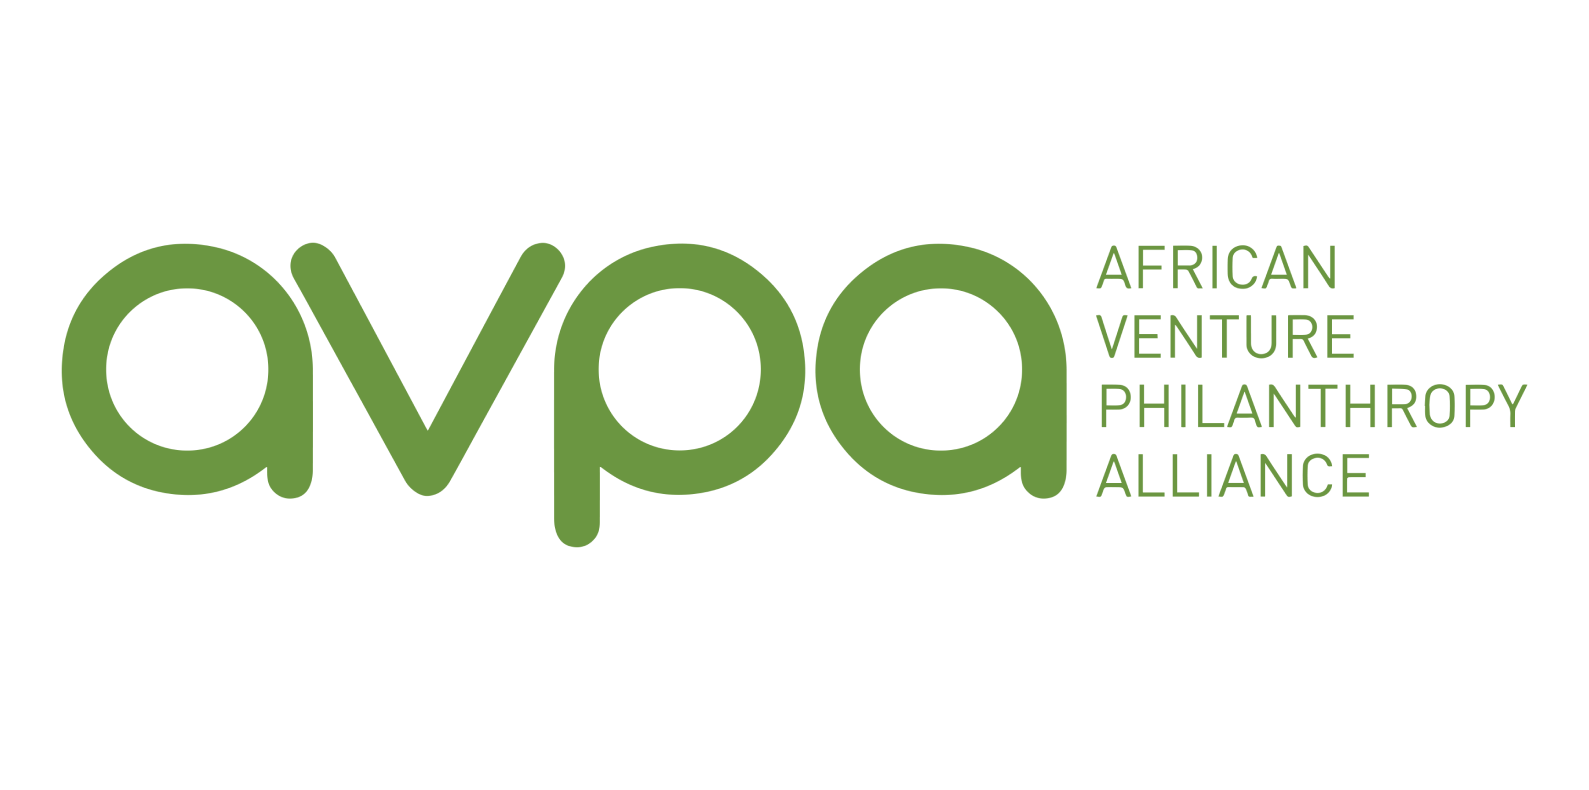 African Venture Philanthropy Alliance